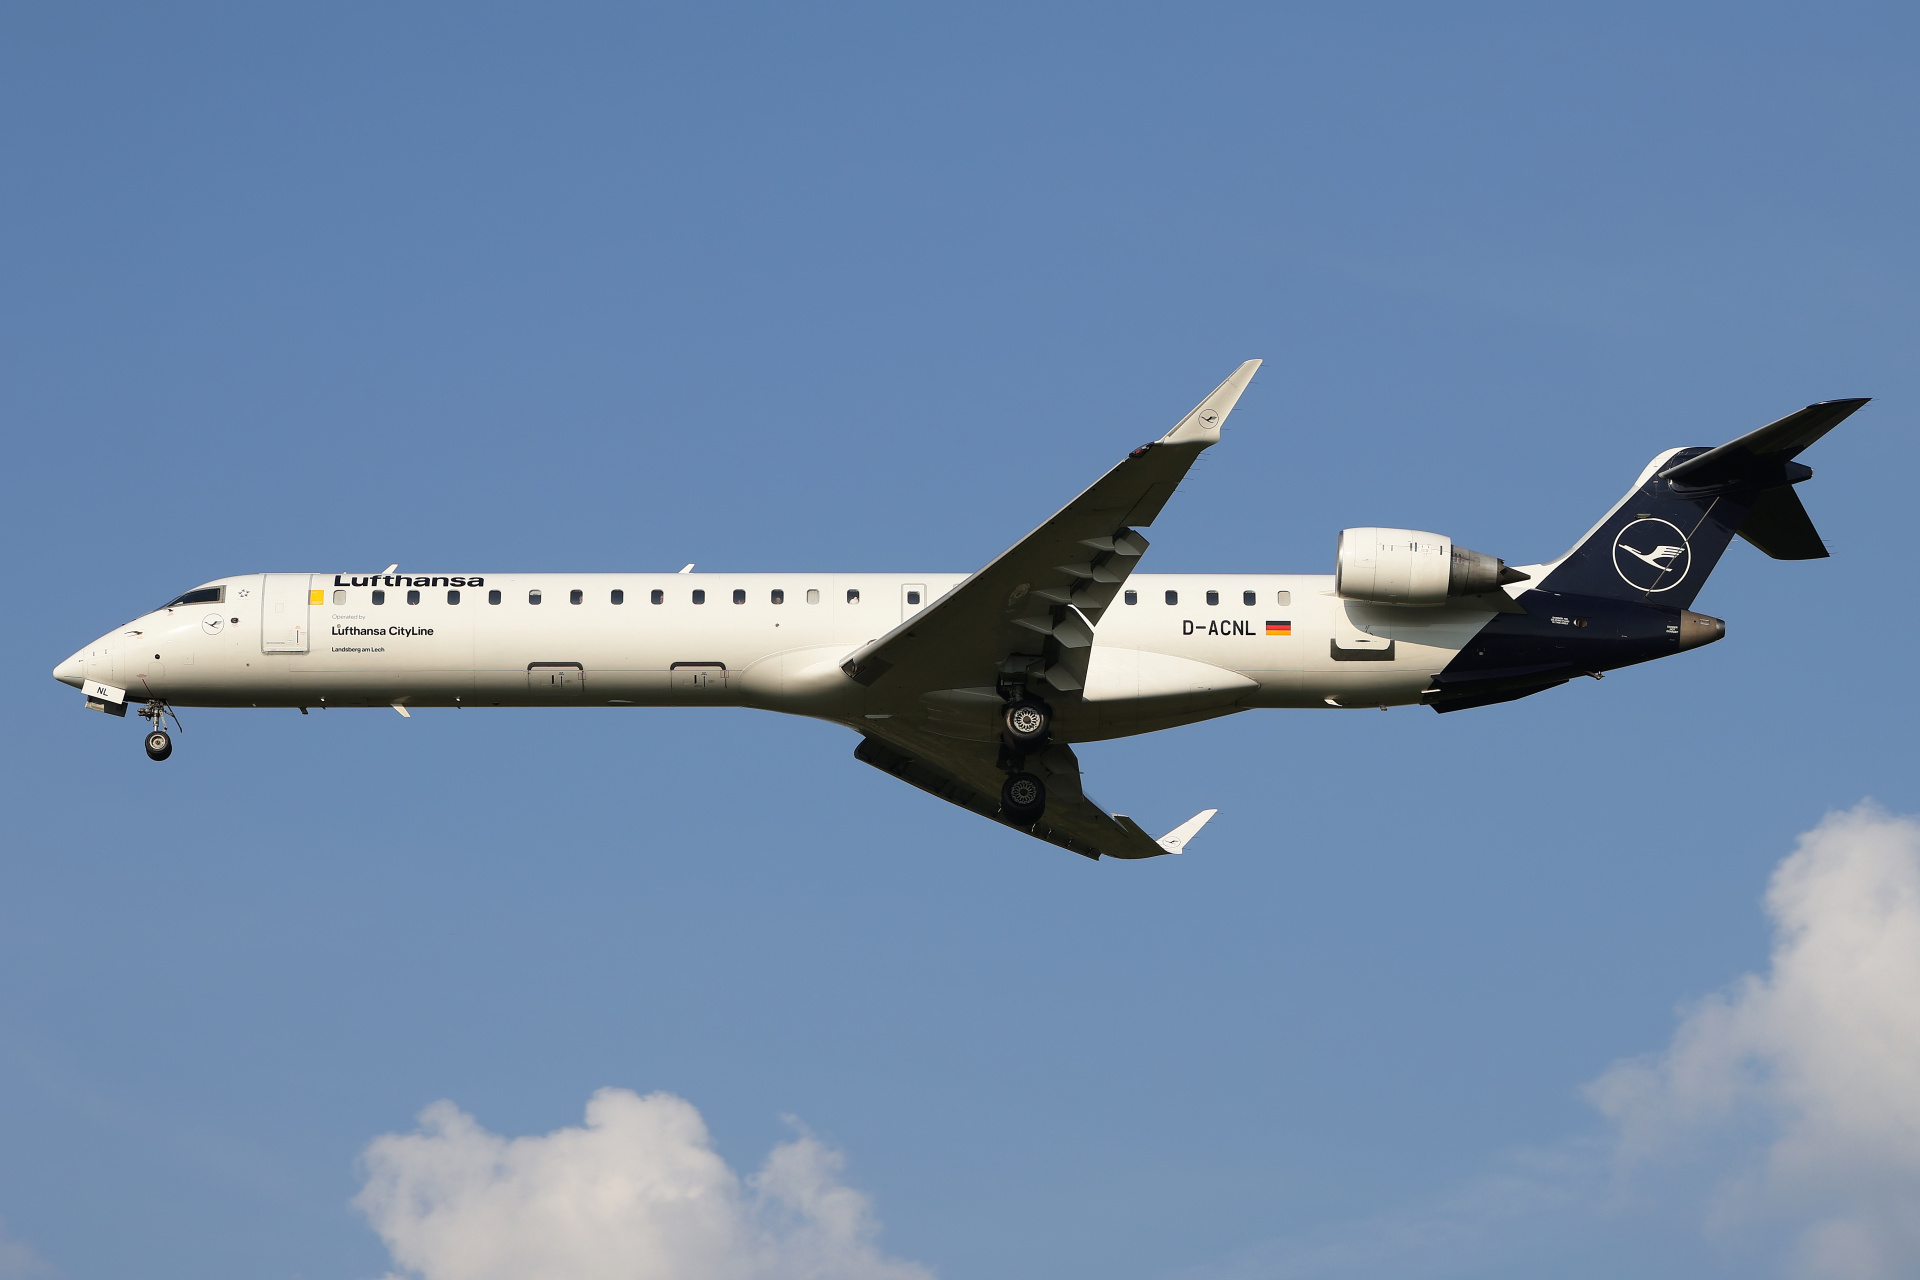 D-ACNL, Lufthansa (Lufthansa Cityline) (Aircraft » EPWA Spotting » Mitsubishi Regional Jet » CRJ-900)